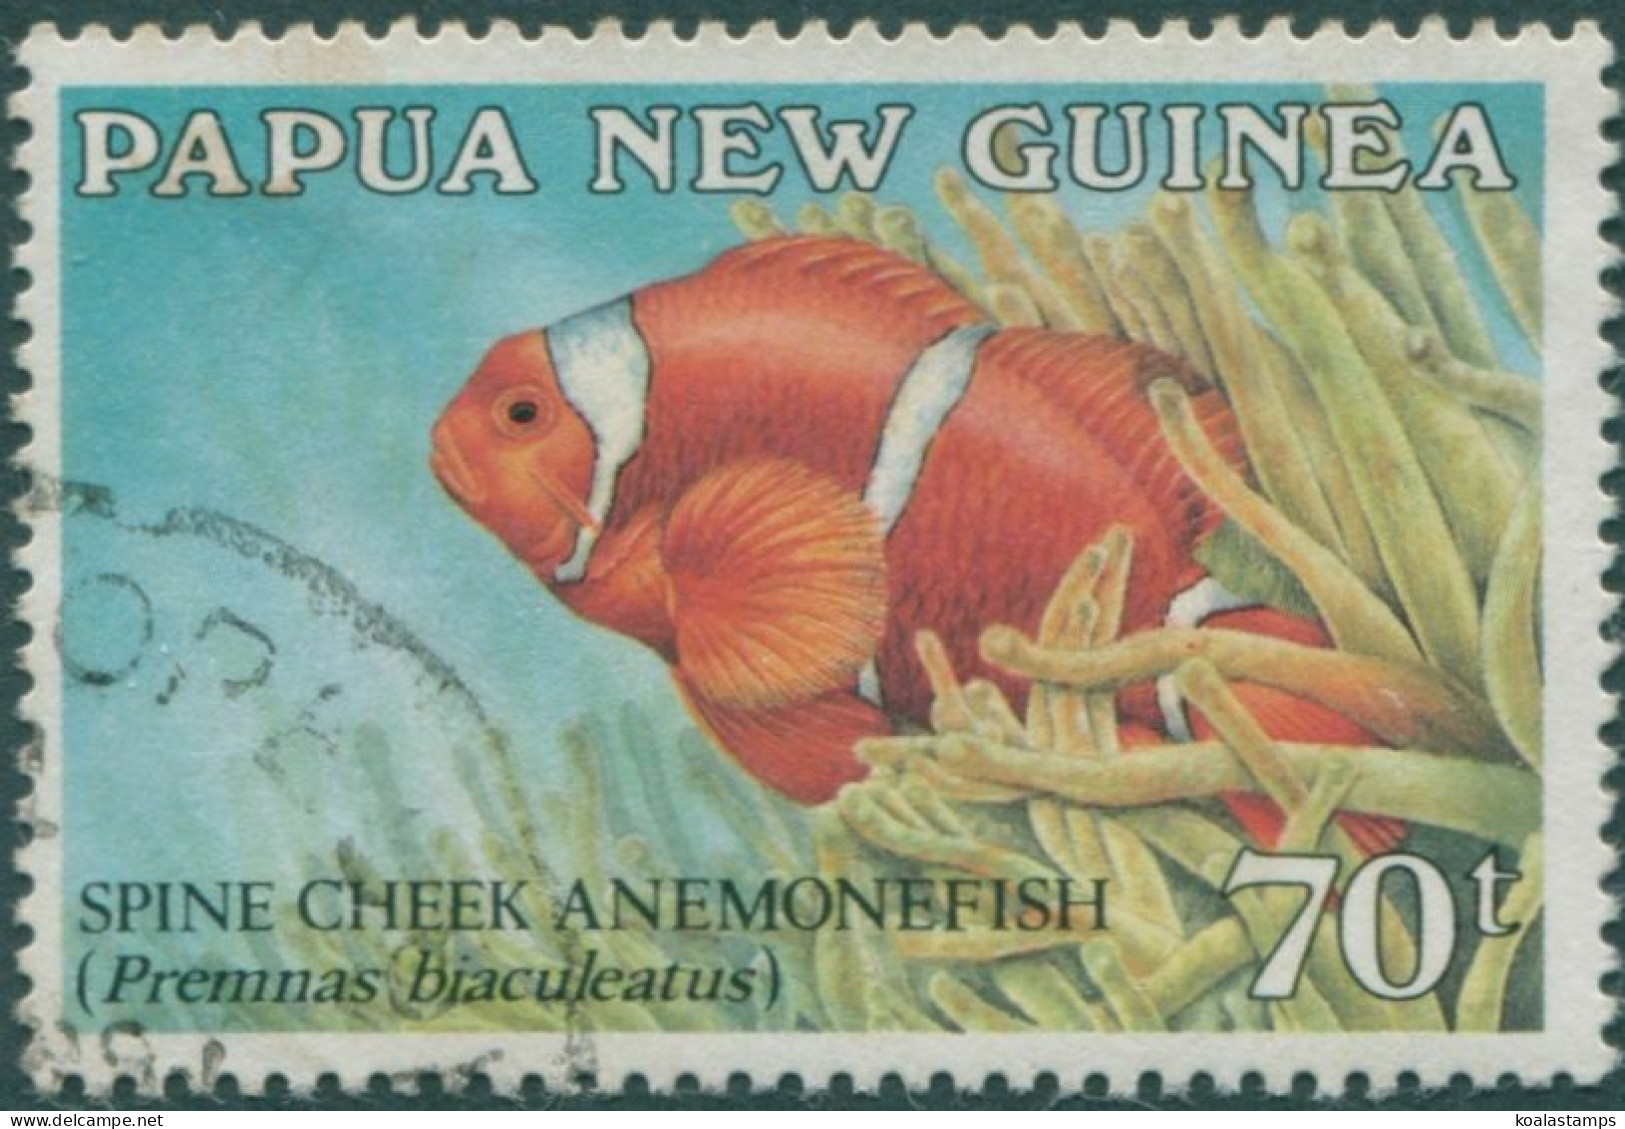 Papua New Guinea 1987 SG542 70t Spine Cheek Anemonefish FU - Papua New Guinea